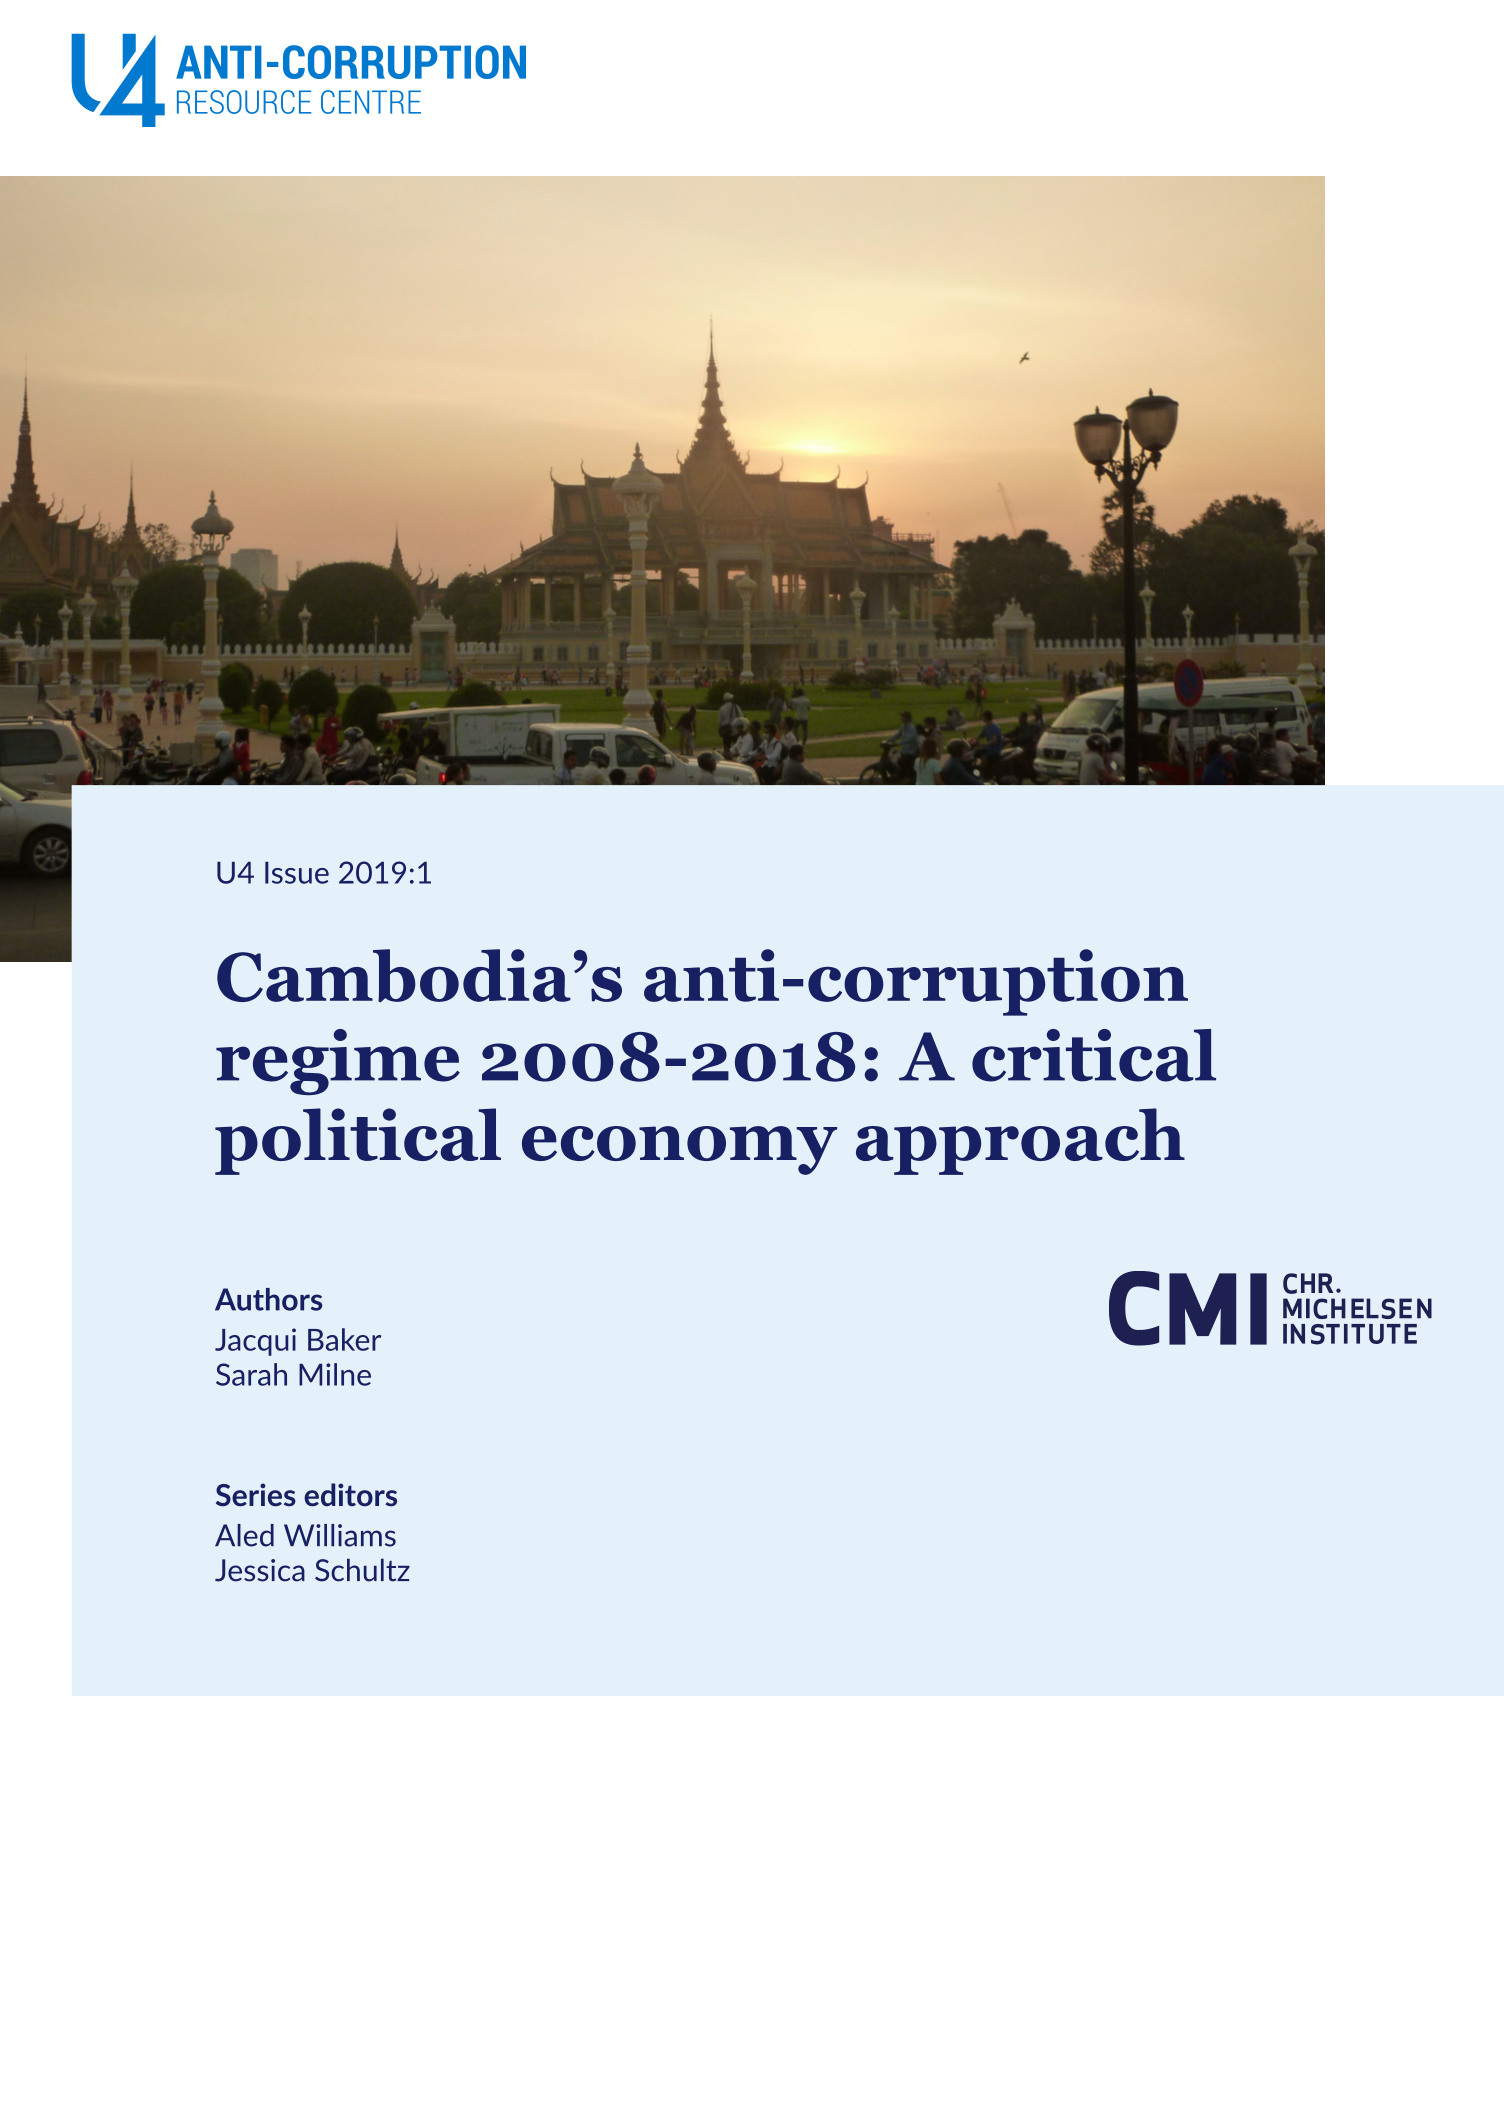 Cambodia’s anti-corruption regime 2008-2018: A critical political economy approach